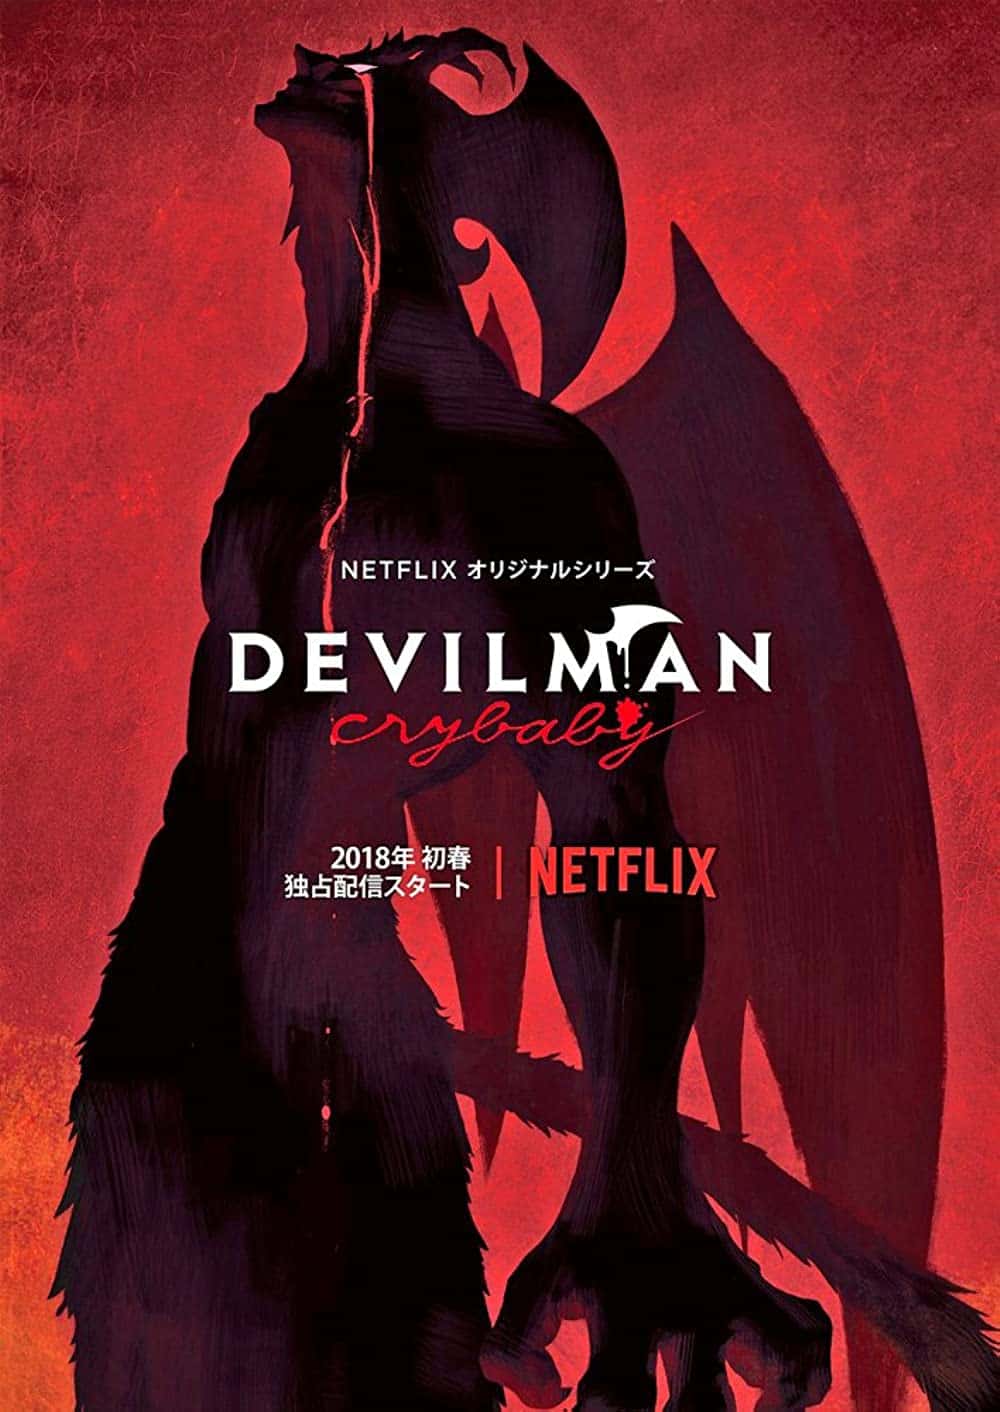 Devilman Crybaby hd poster